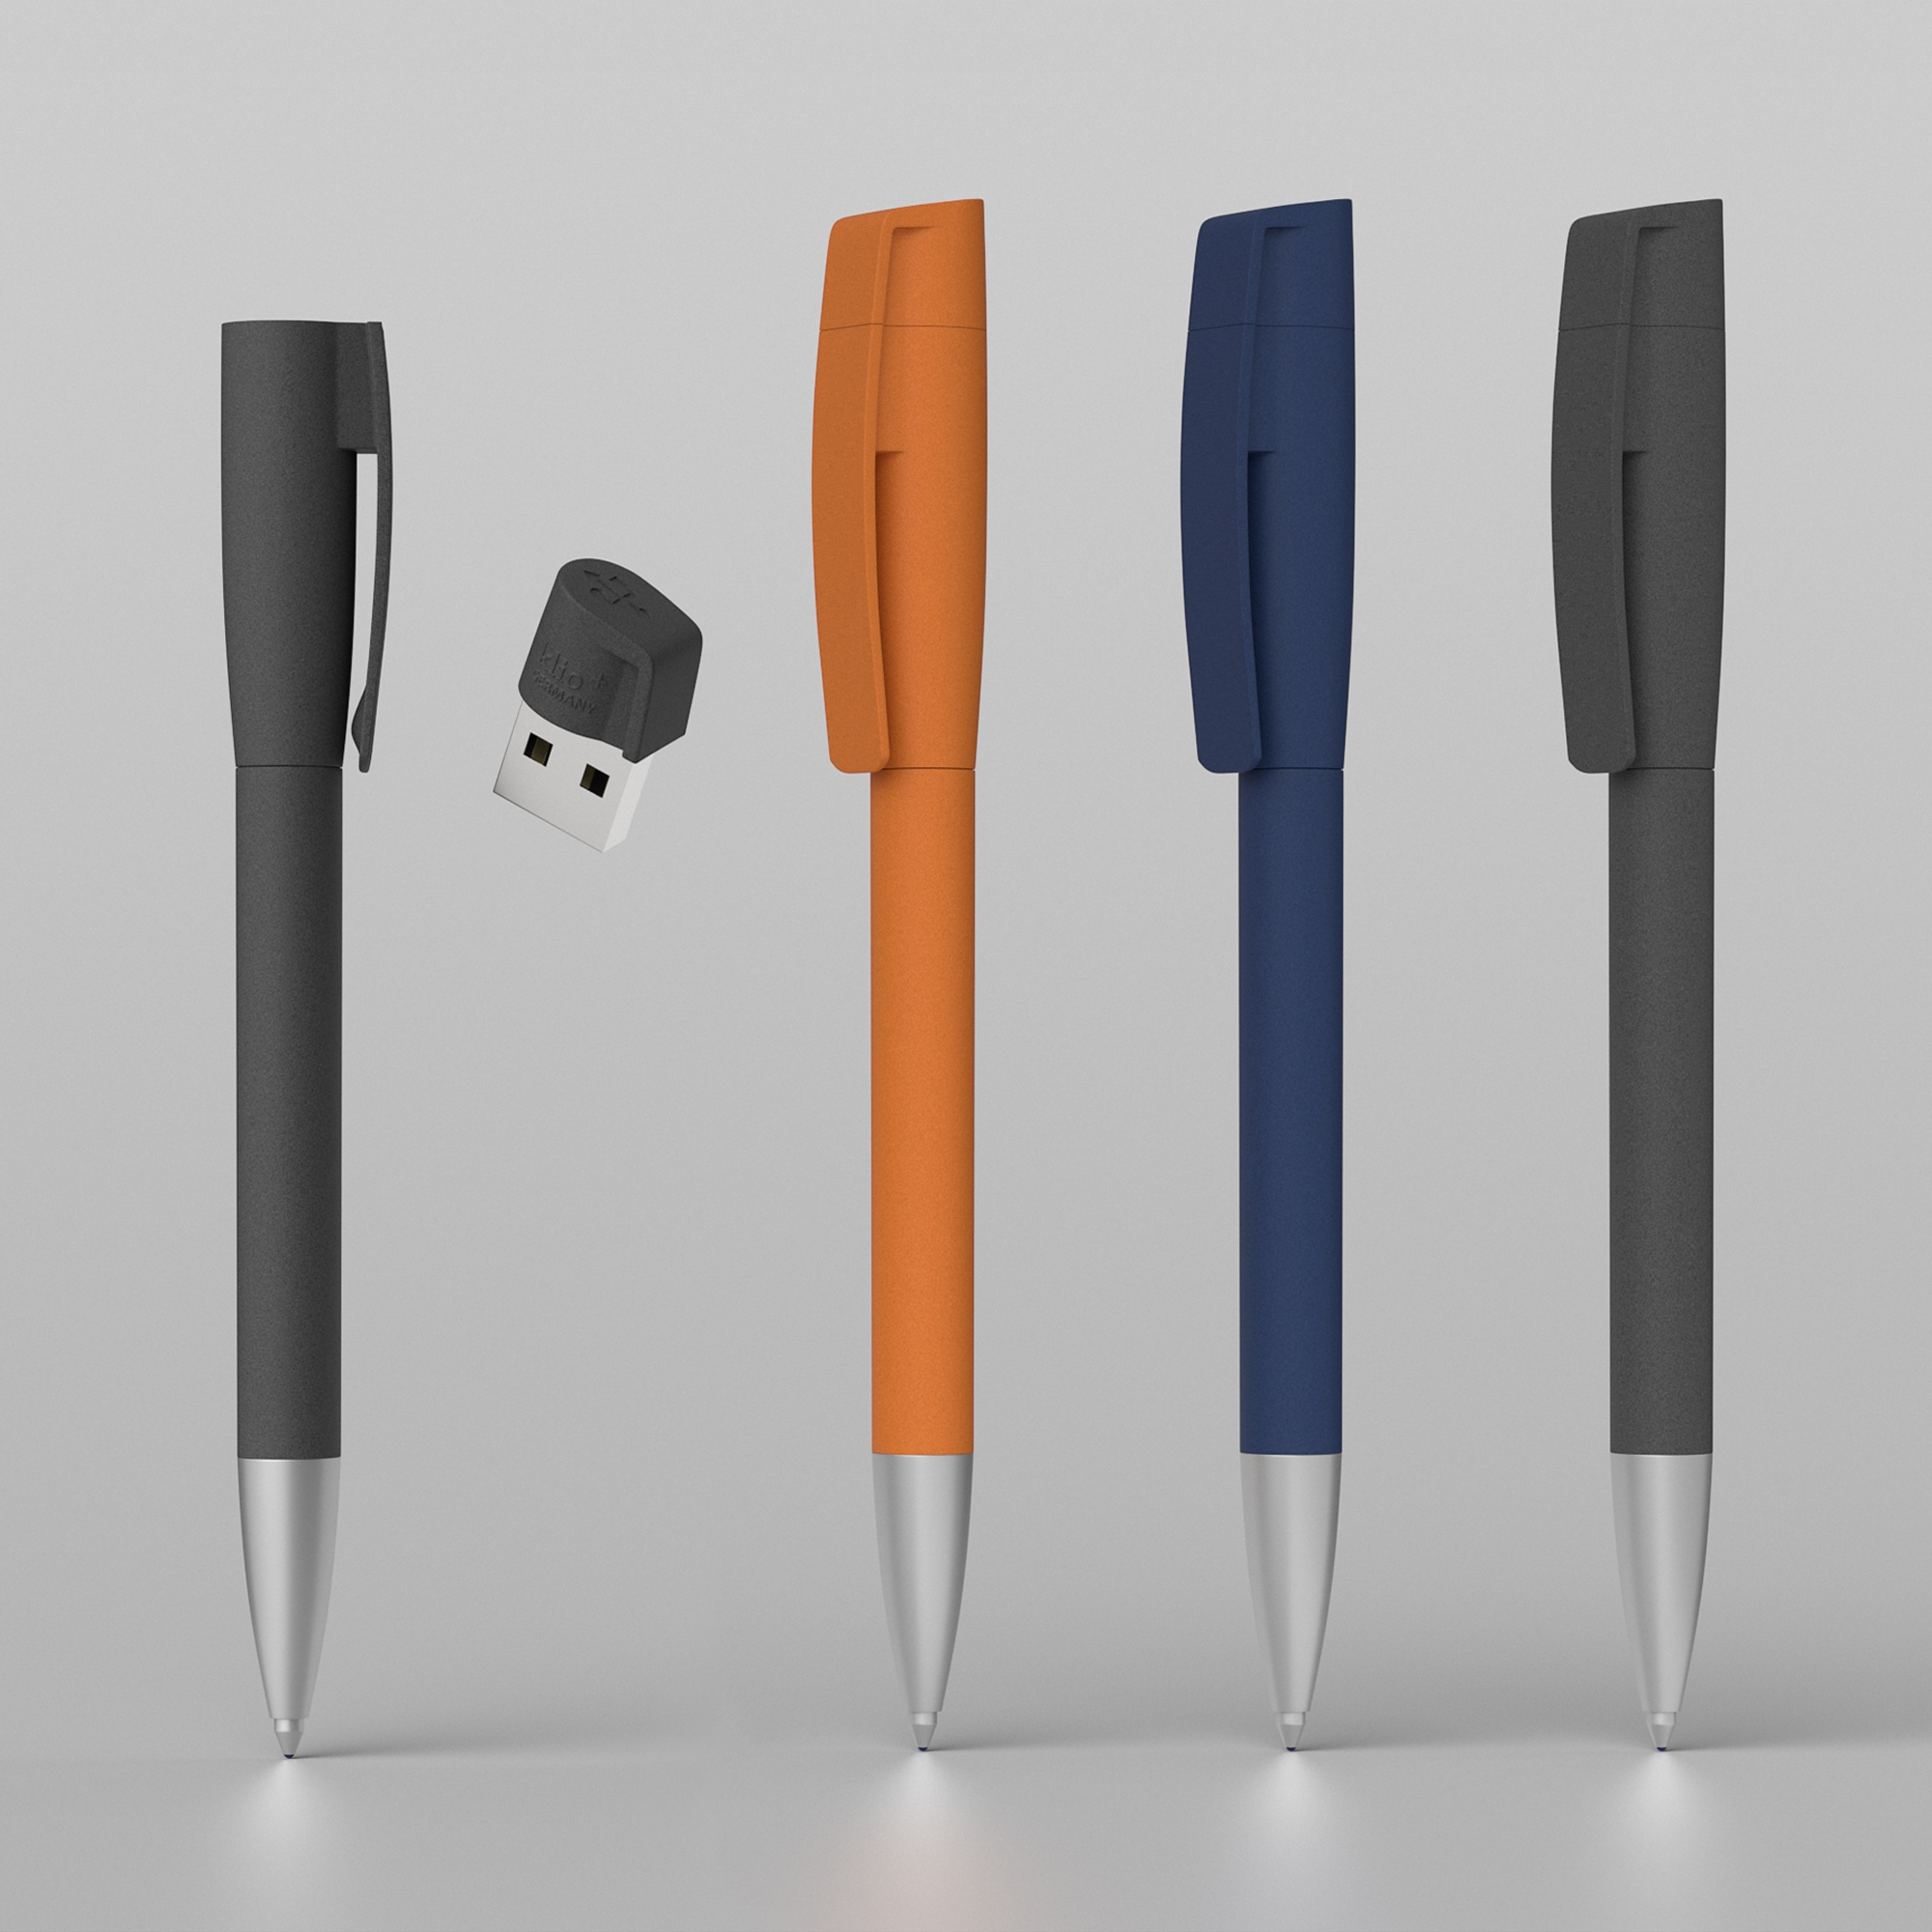 Ручка с флеш-картой USB 16GB «TURNUSsoftgrip M», синий, пластик/soft grip/металл